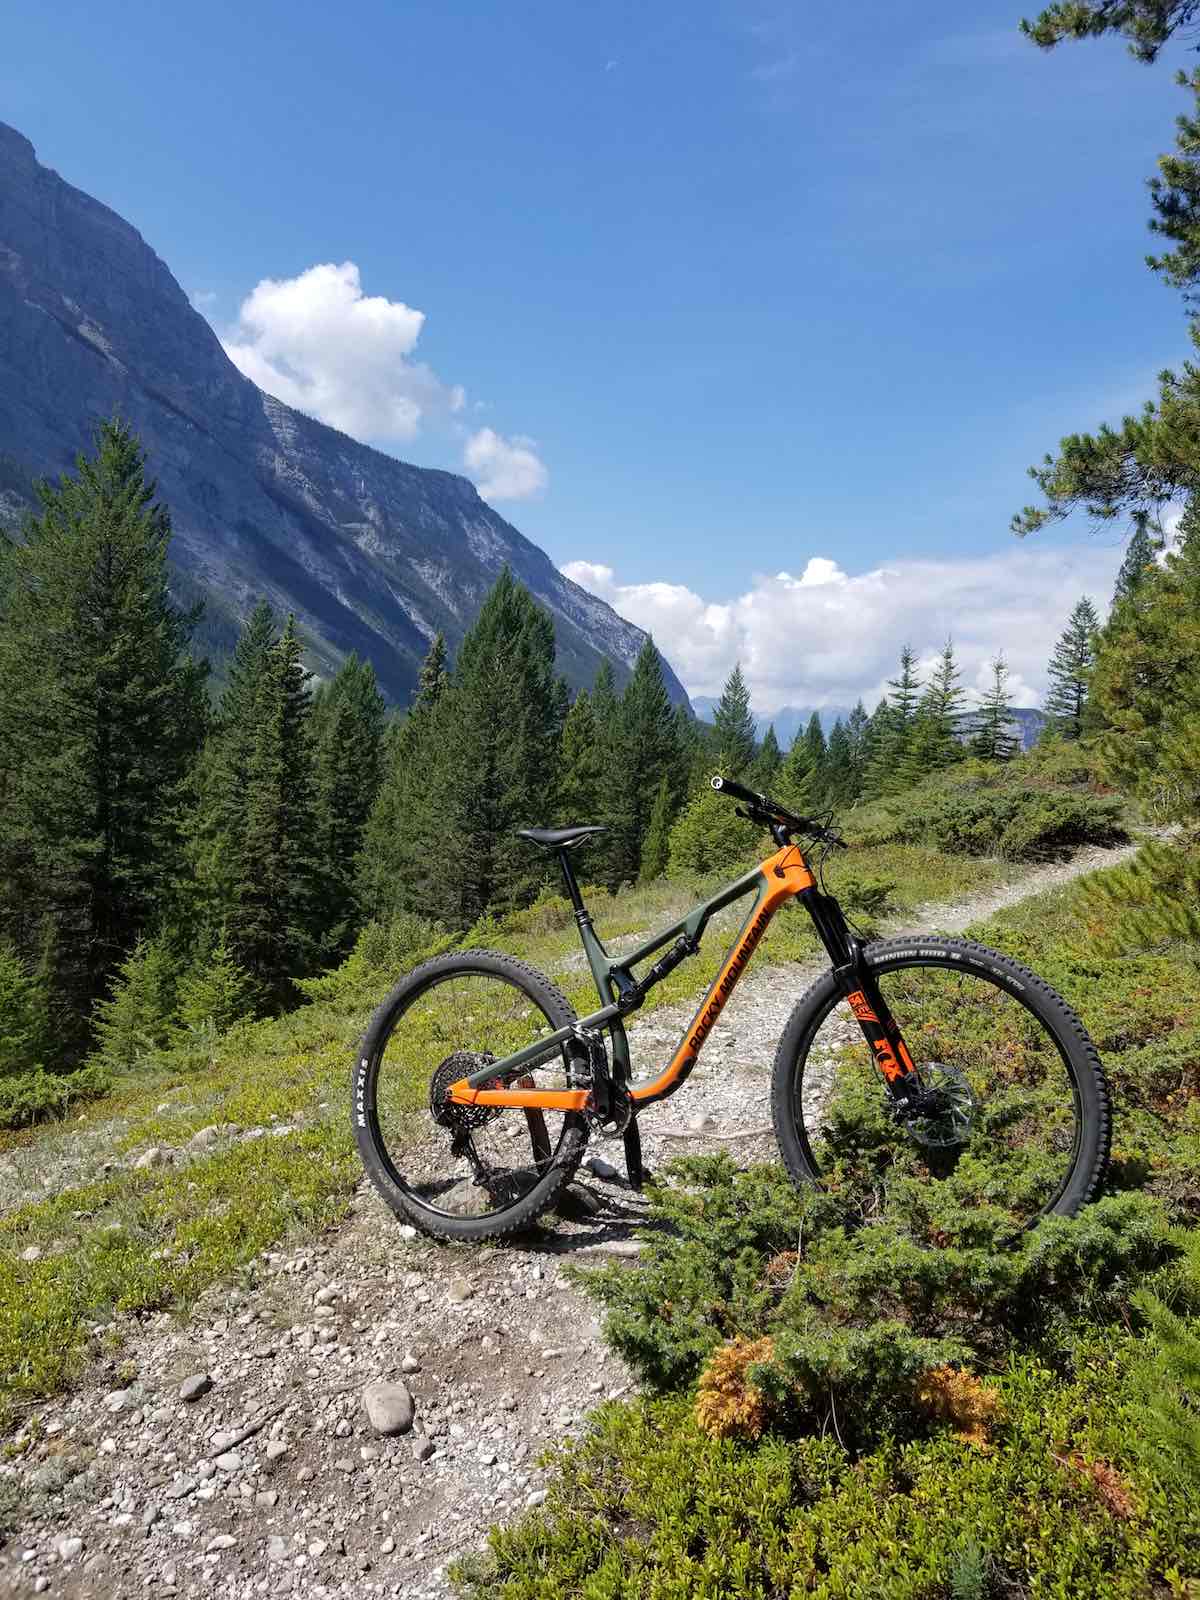 bikerumor pic of the day rocky mountain bicycle in banff, alberta, canada bike riding